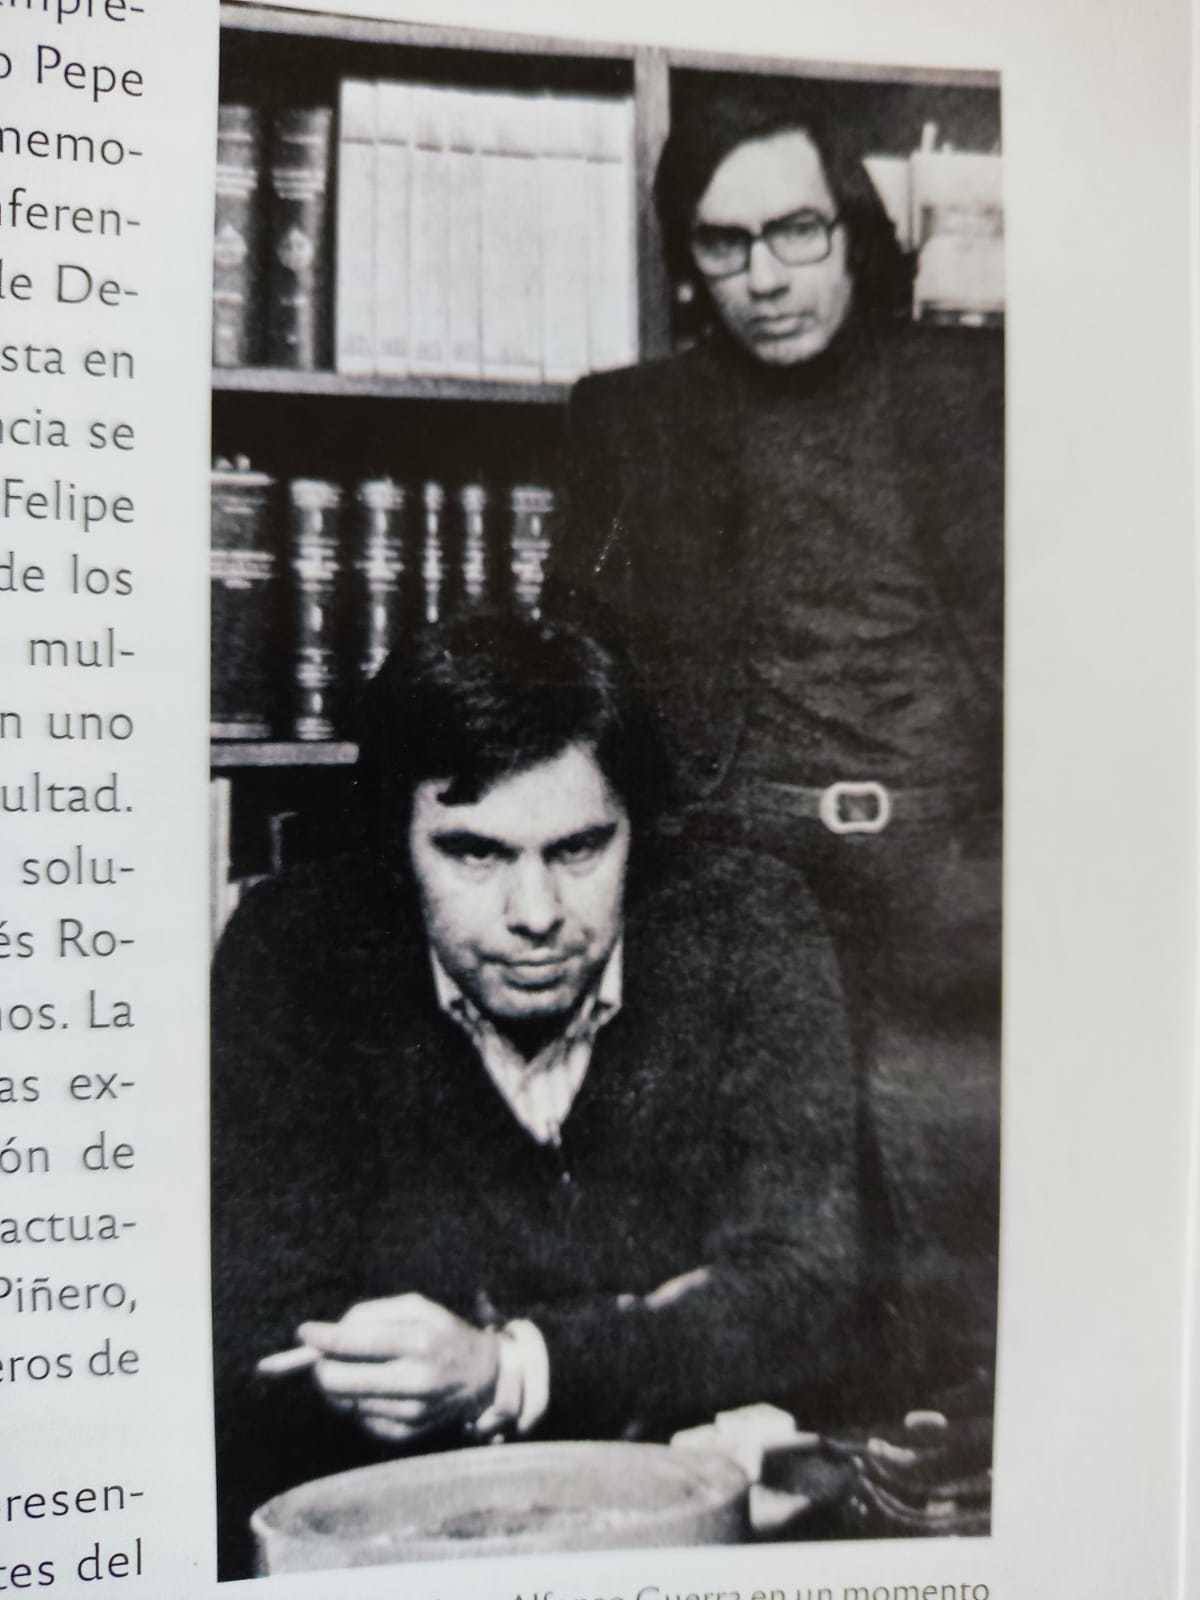 Felipe Gonzlez y Alfonso Guerra, en Sevilla, en 1976.